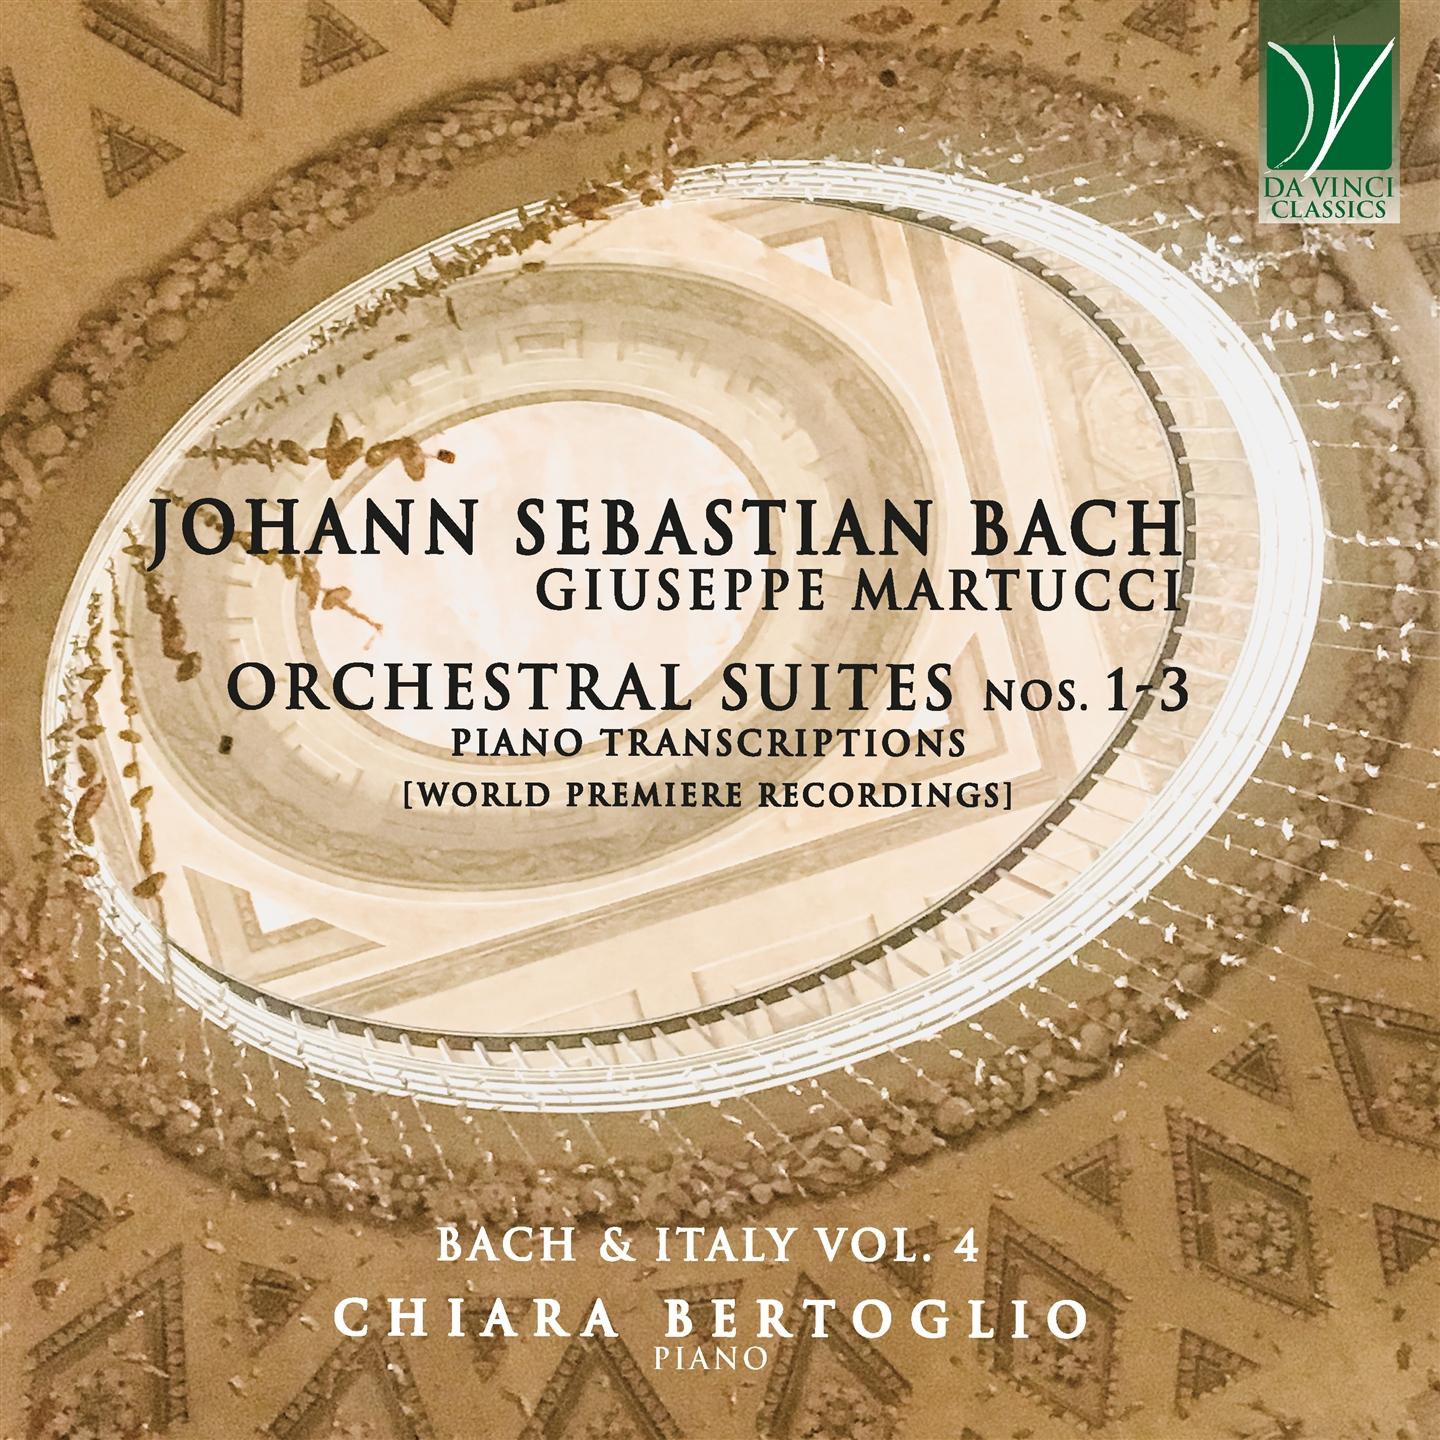 JOHANN SEBASTIAN BACH: ORCHESTRAL SUITES NOS. 1-3 [PIANO TRANSCRIPTIONS BY GIUS